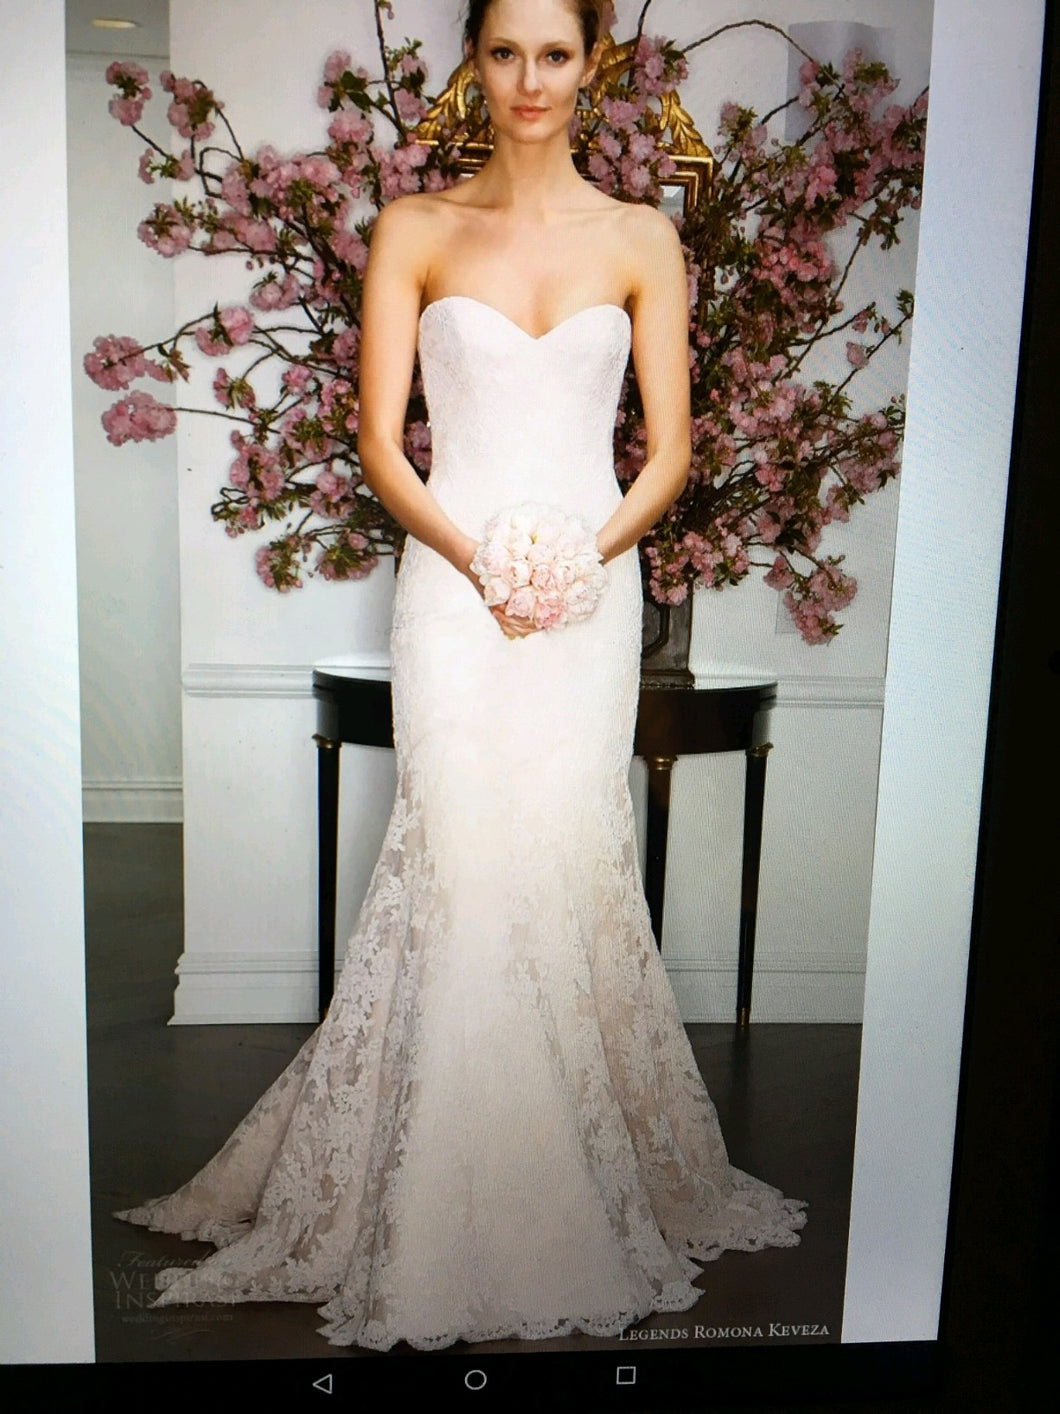 Romona Keveza 'Legends' size 12 new wedding dress front view on model